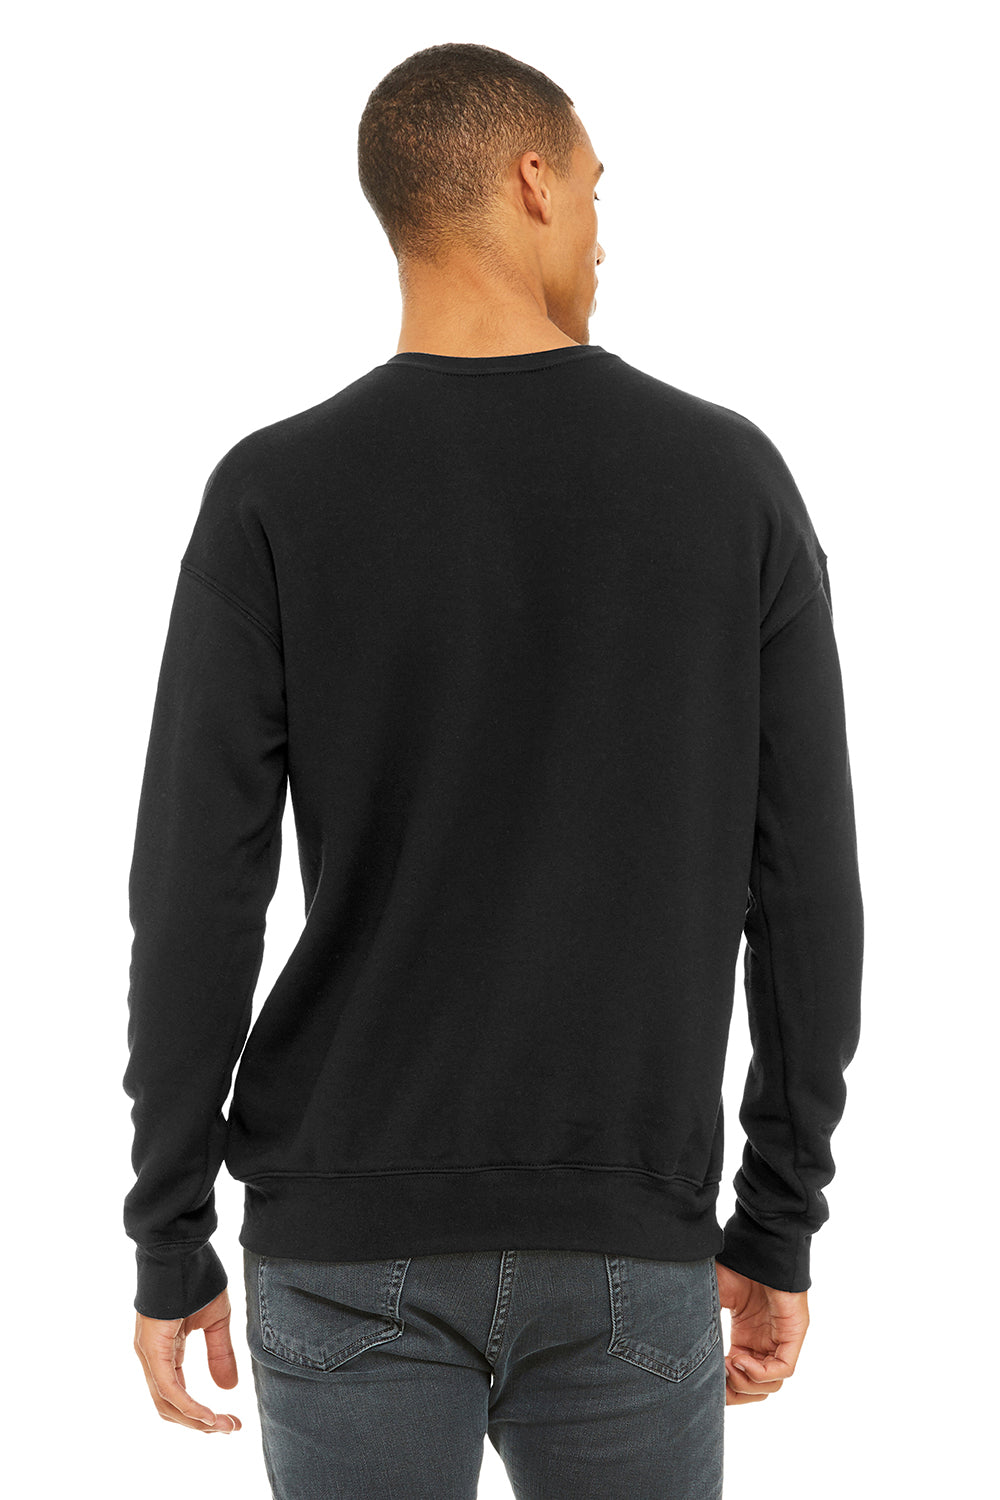 Bella + Canvas BC3945/3945 Mens Fleece Crewneck Sweatshirt Black Model Back